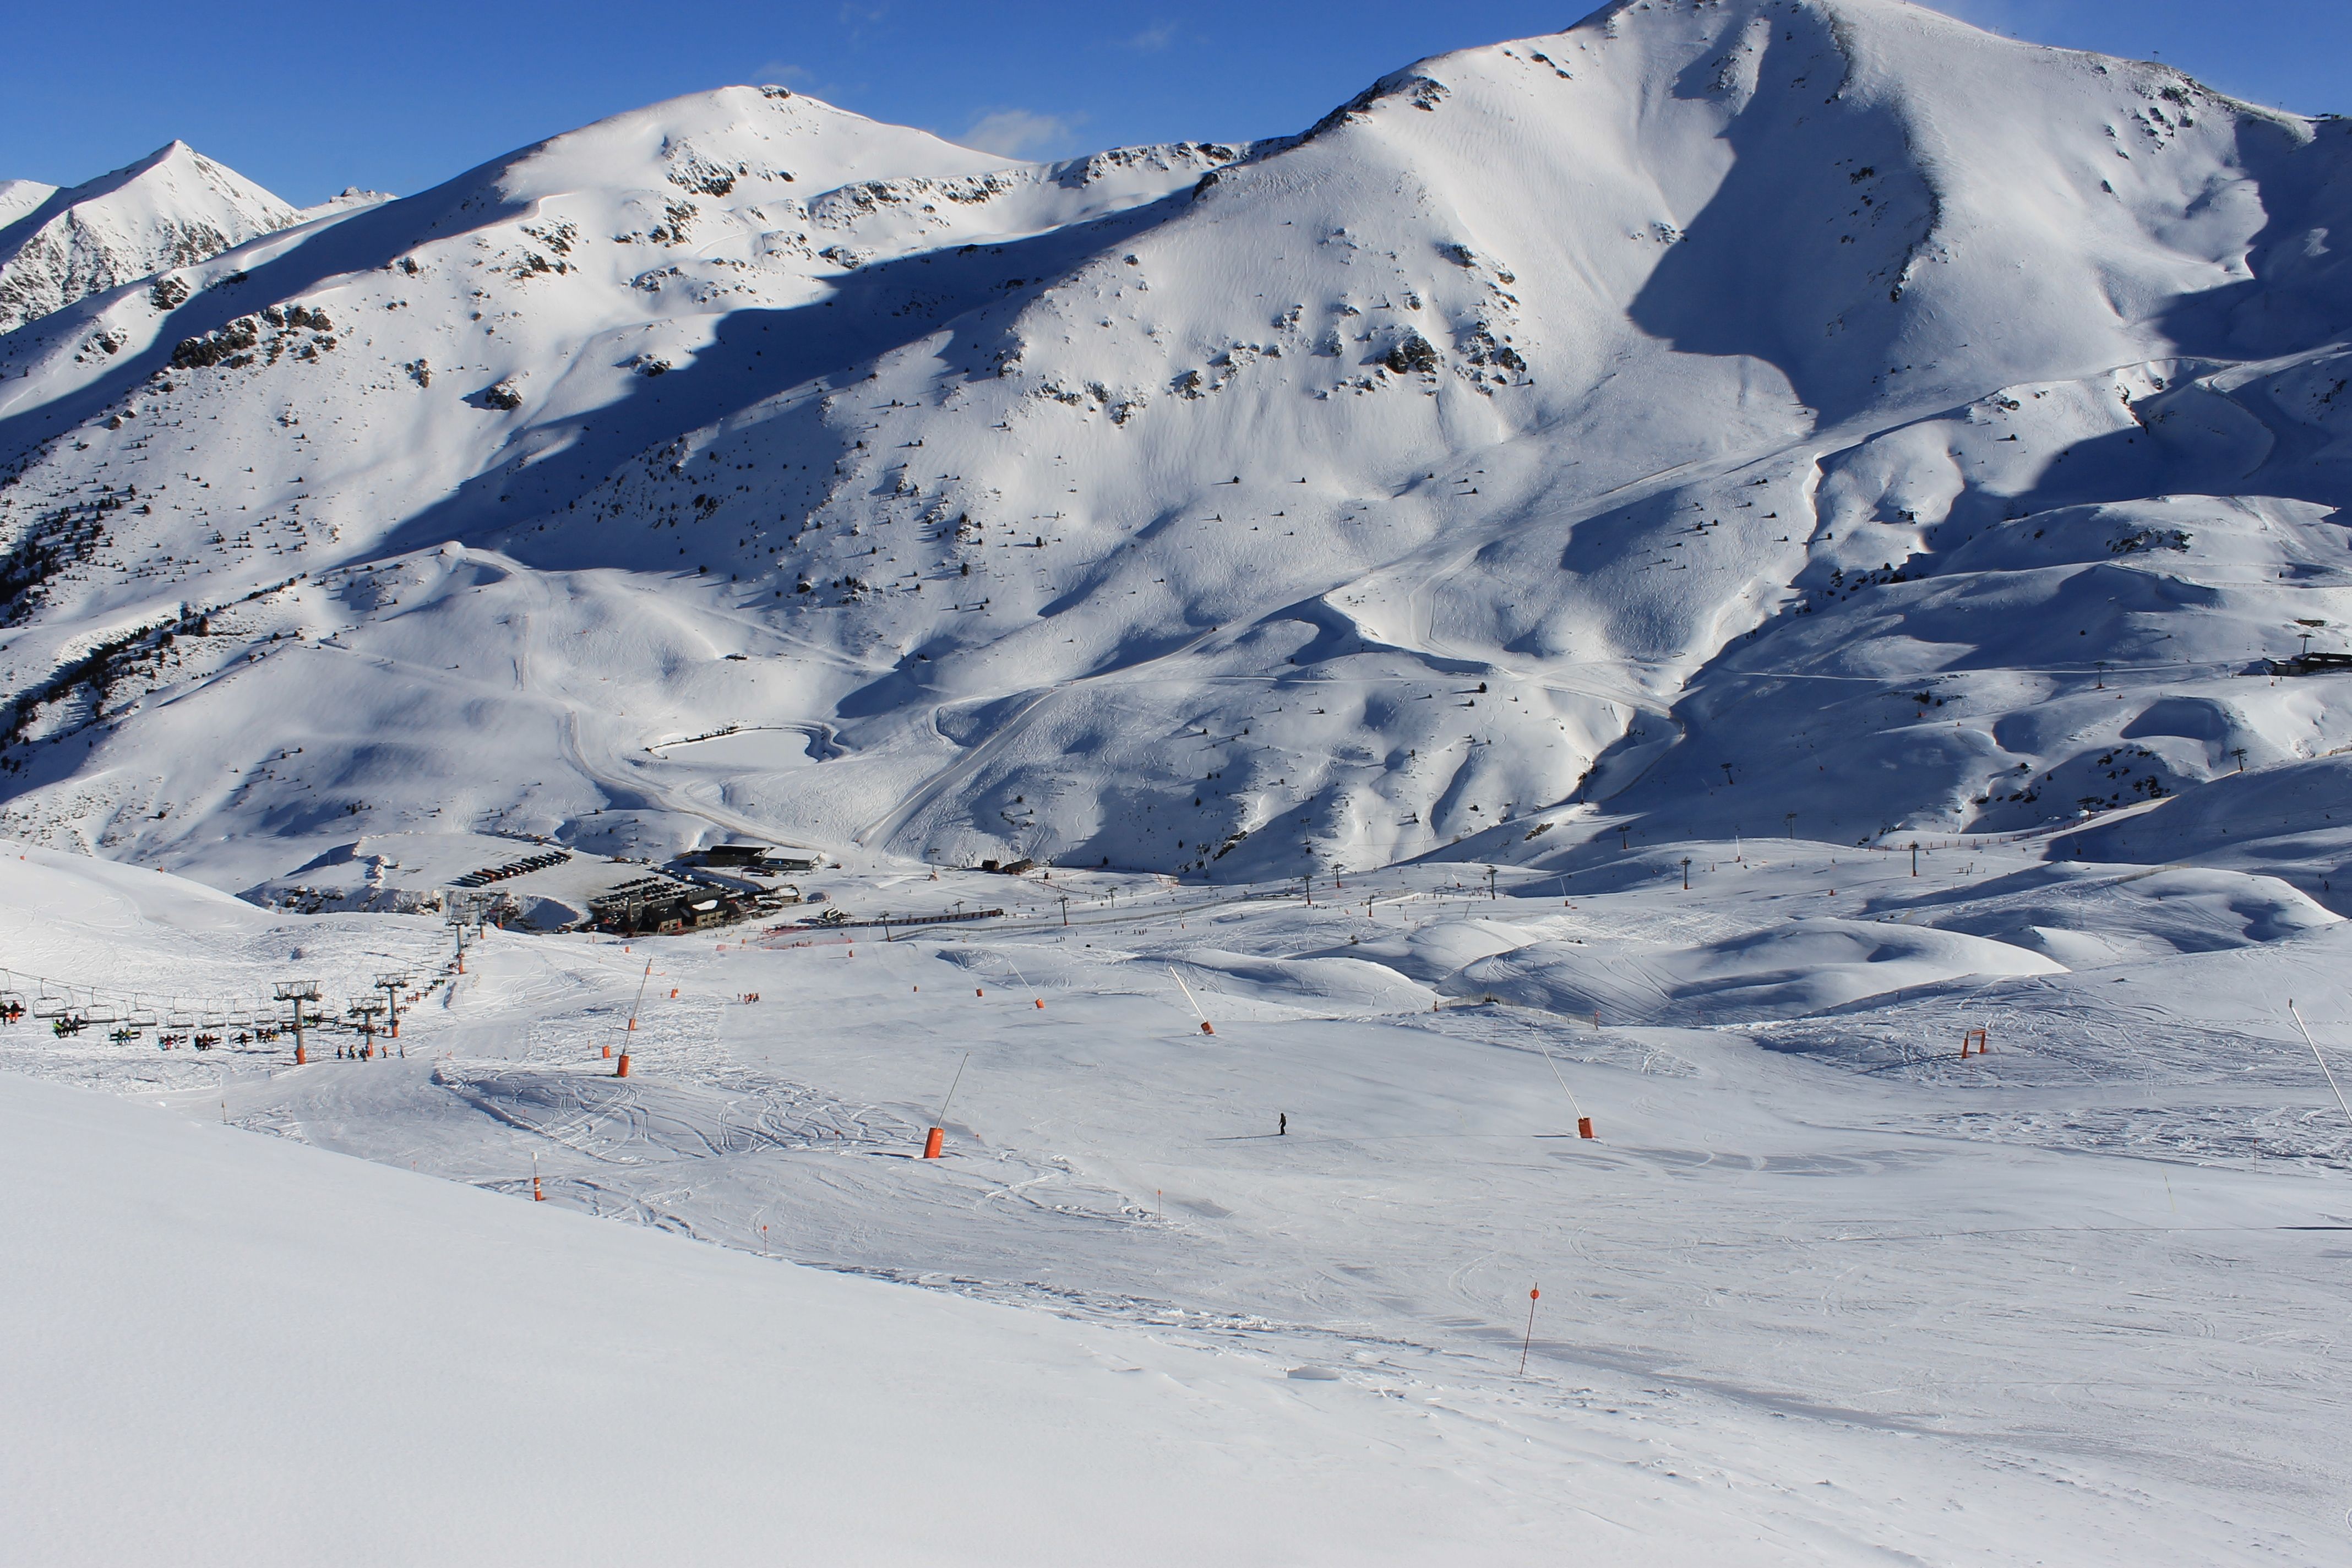 Het skistation Boí Taüll op 2020 meter hoogte